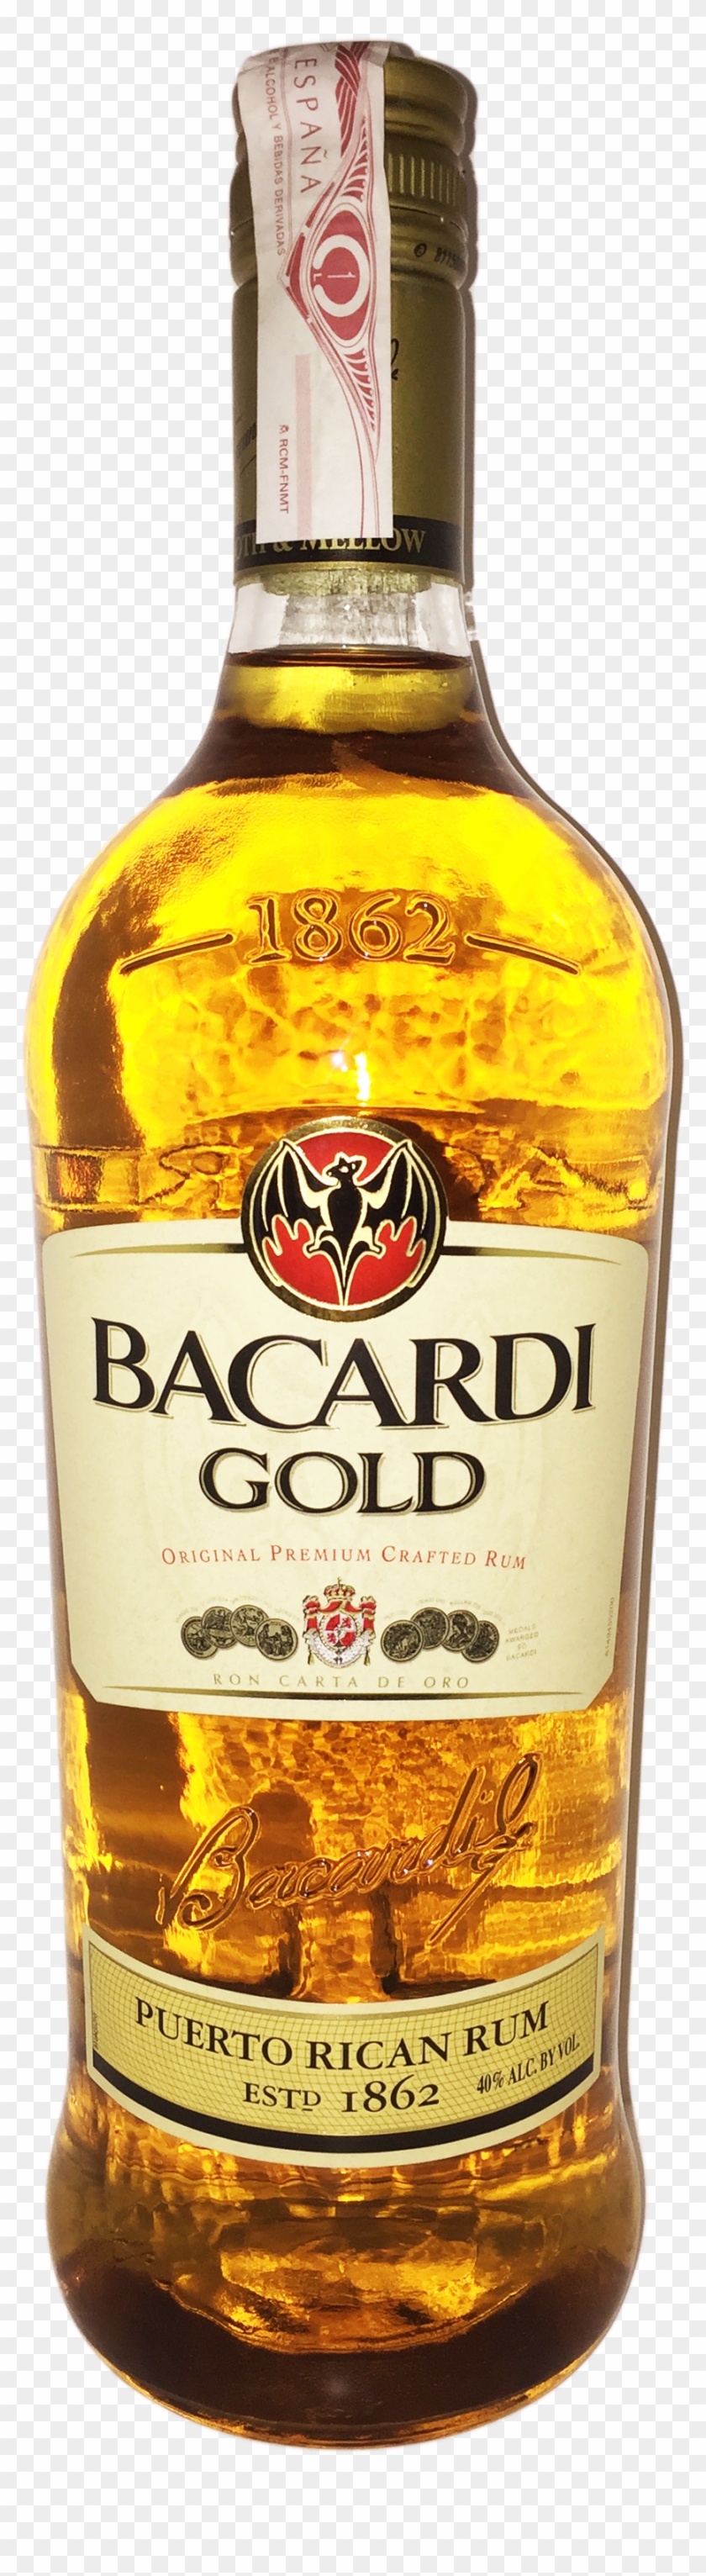 Picture Alcohol Vector Bottle Bacardi - Bacardi Clipart